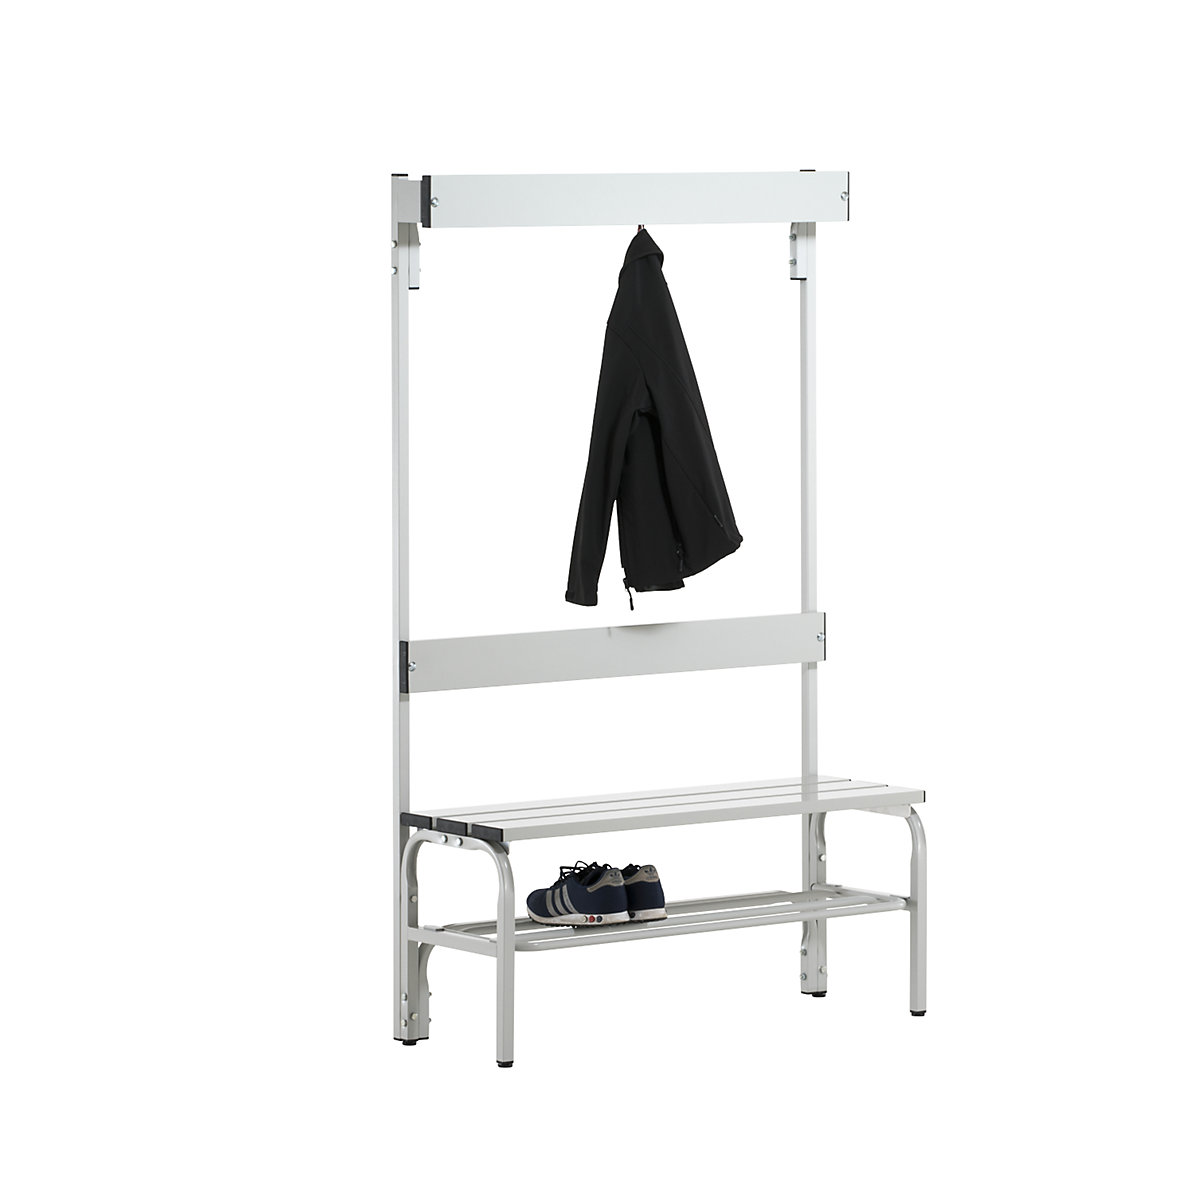 Sypro – Changing room bench with aluminium slats (Product illustration 13)